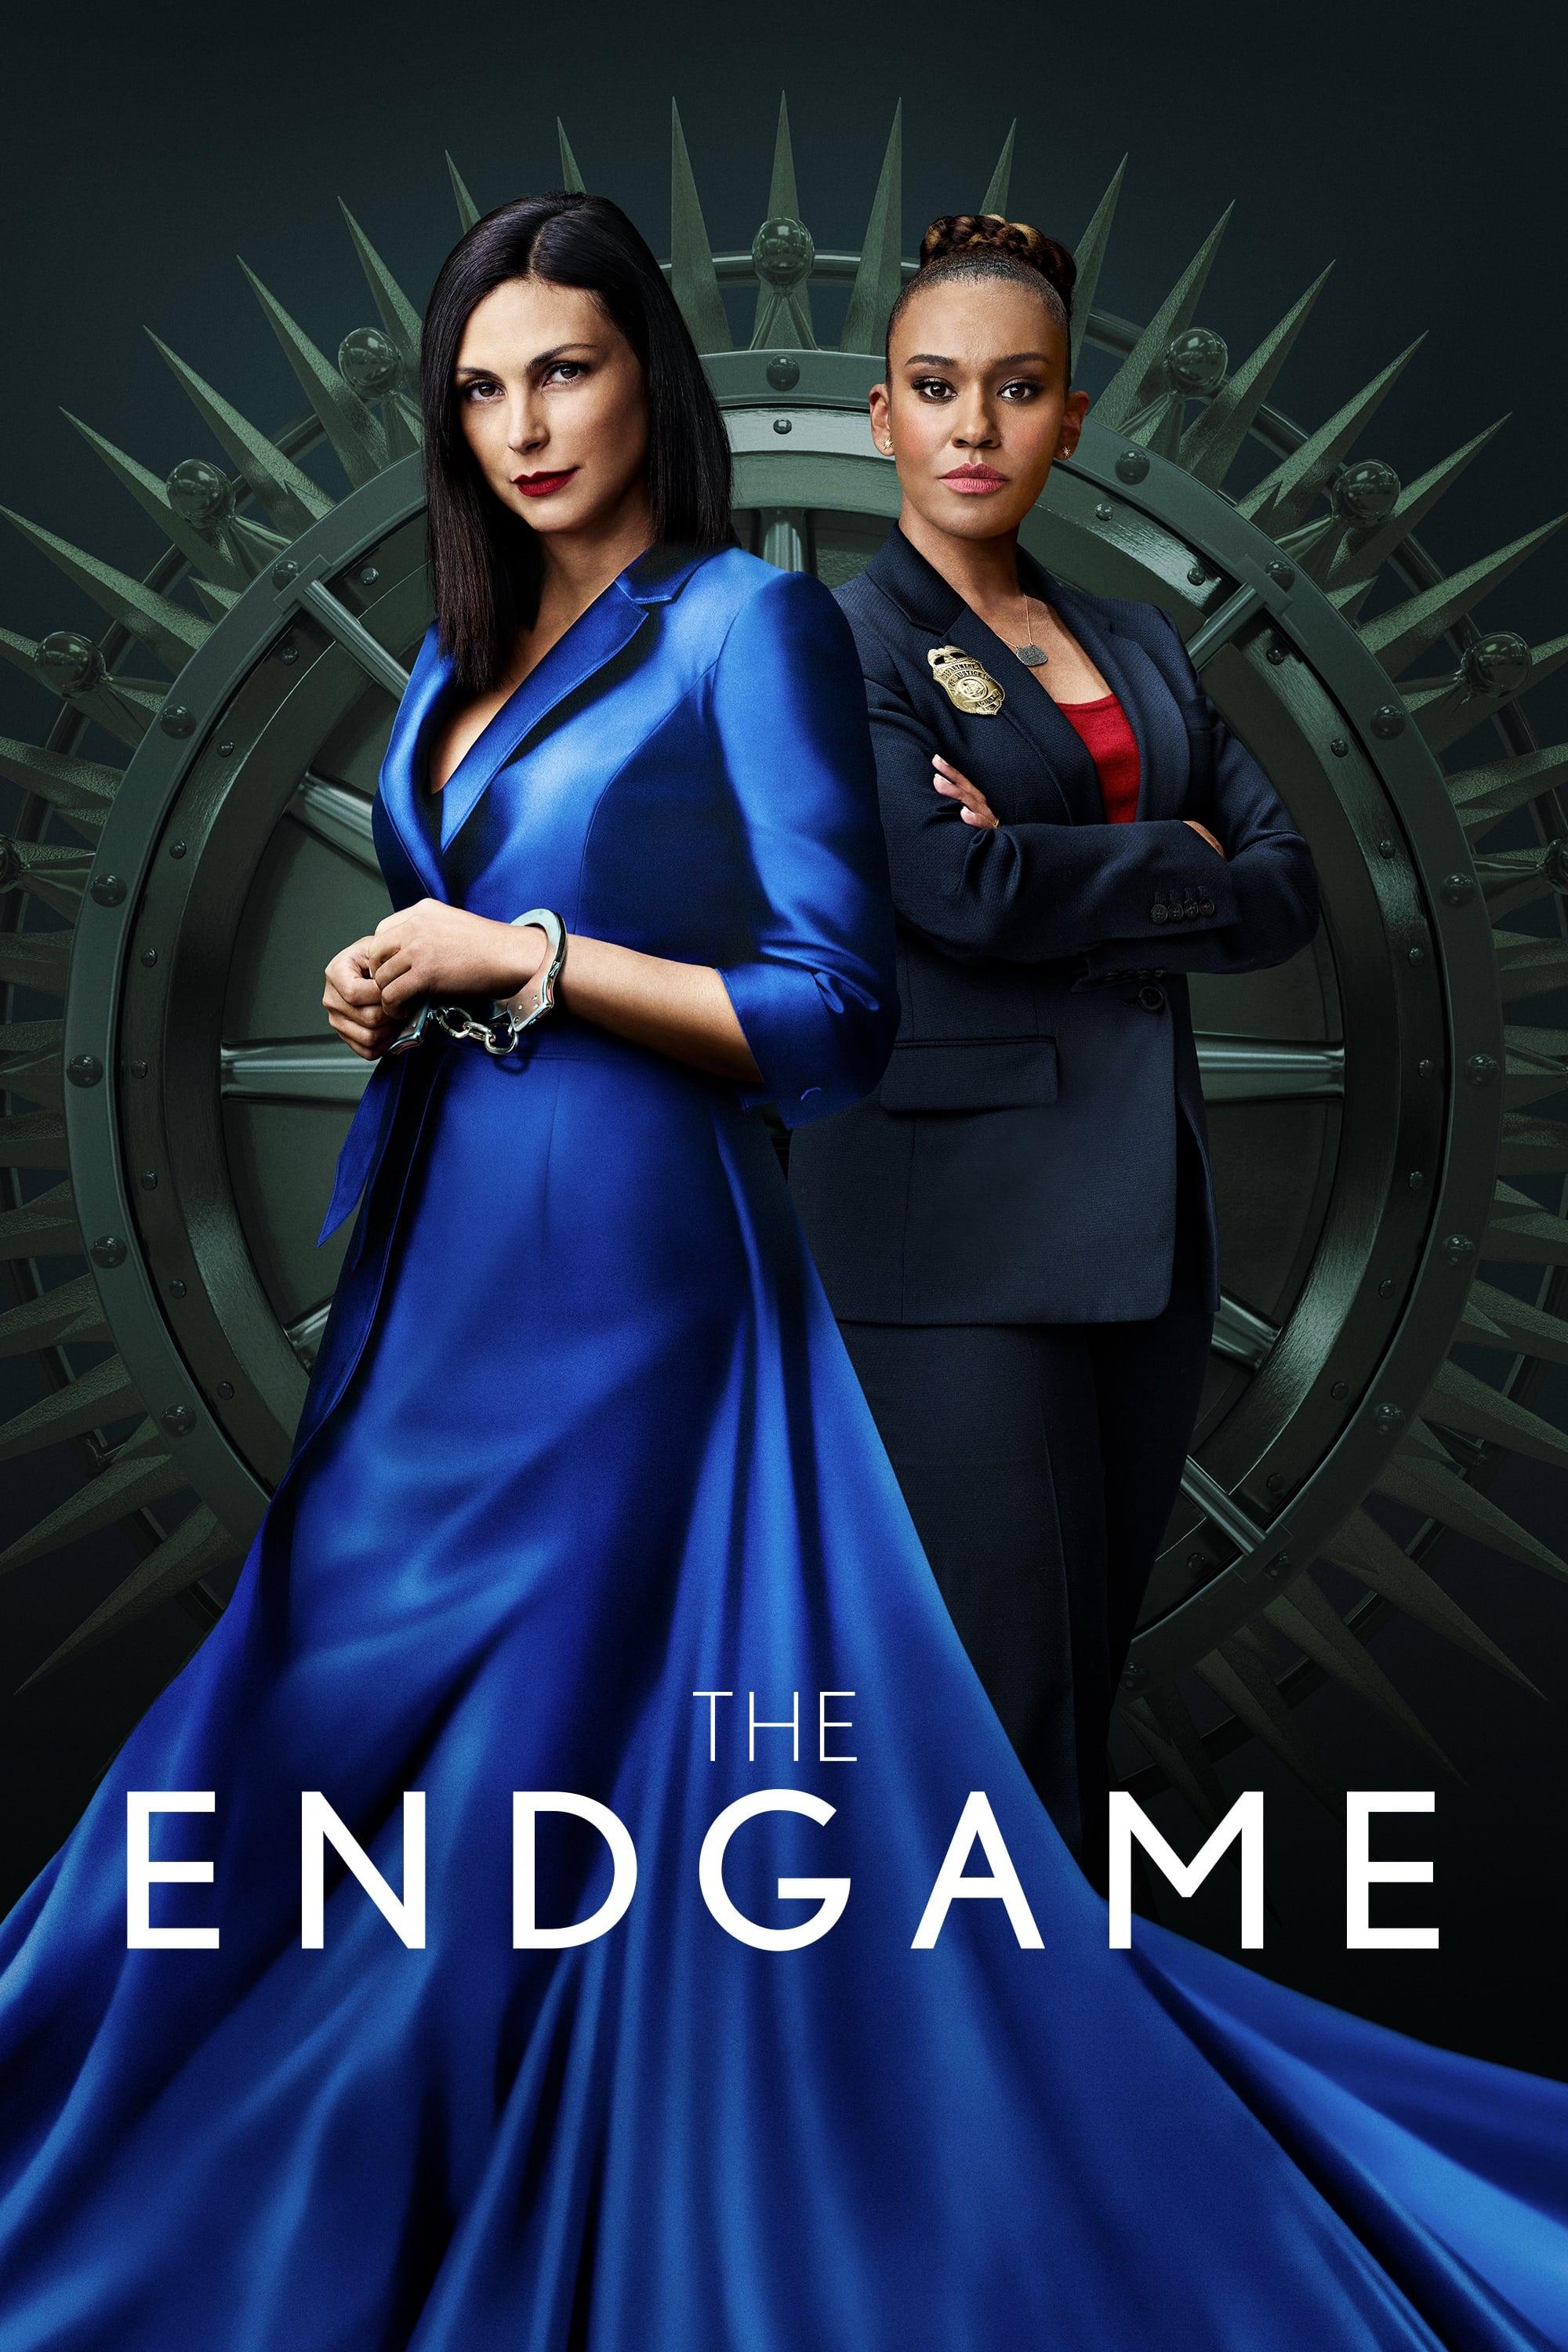 The Endgame poster